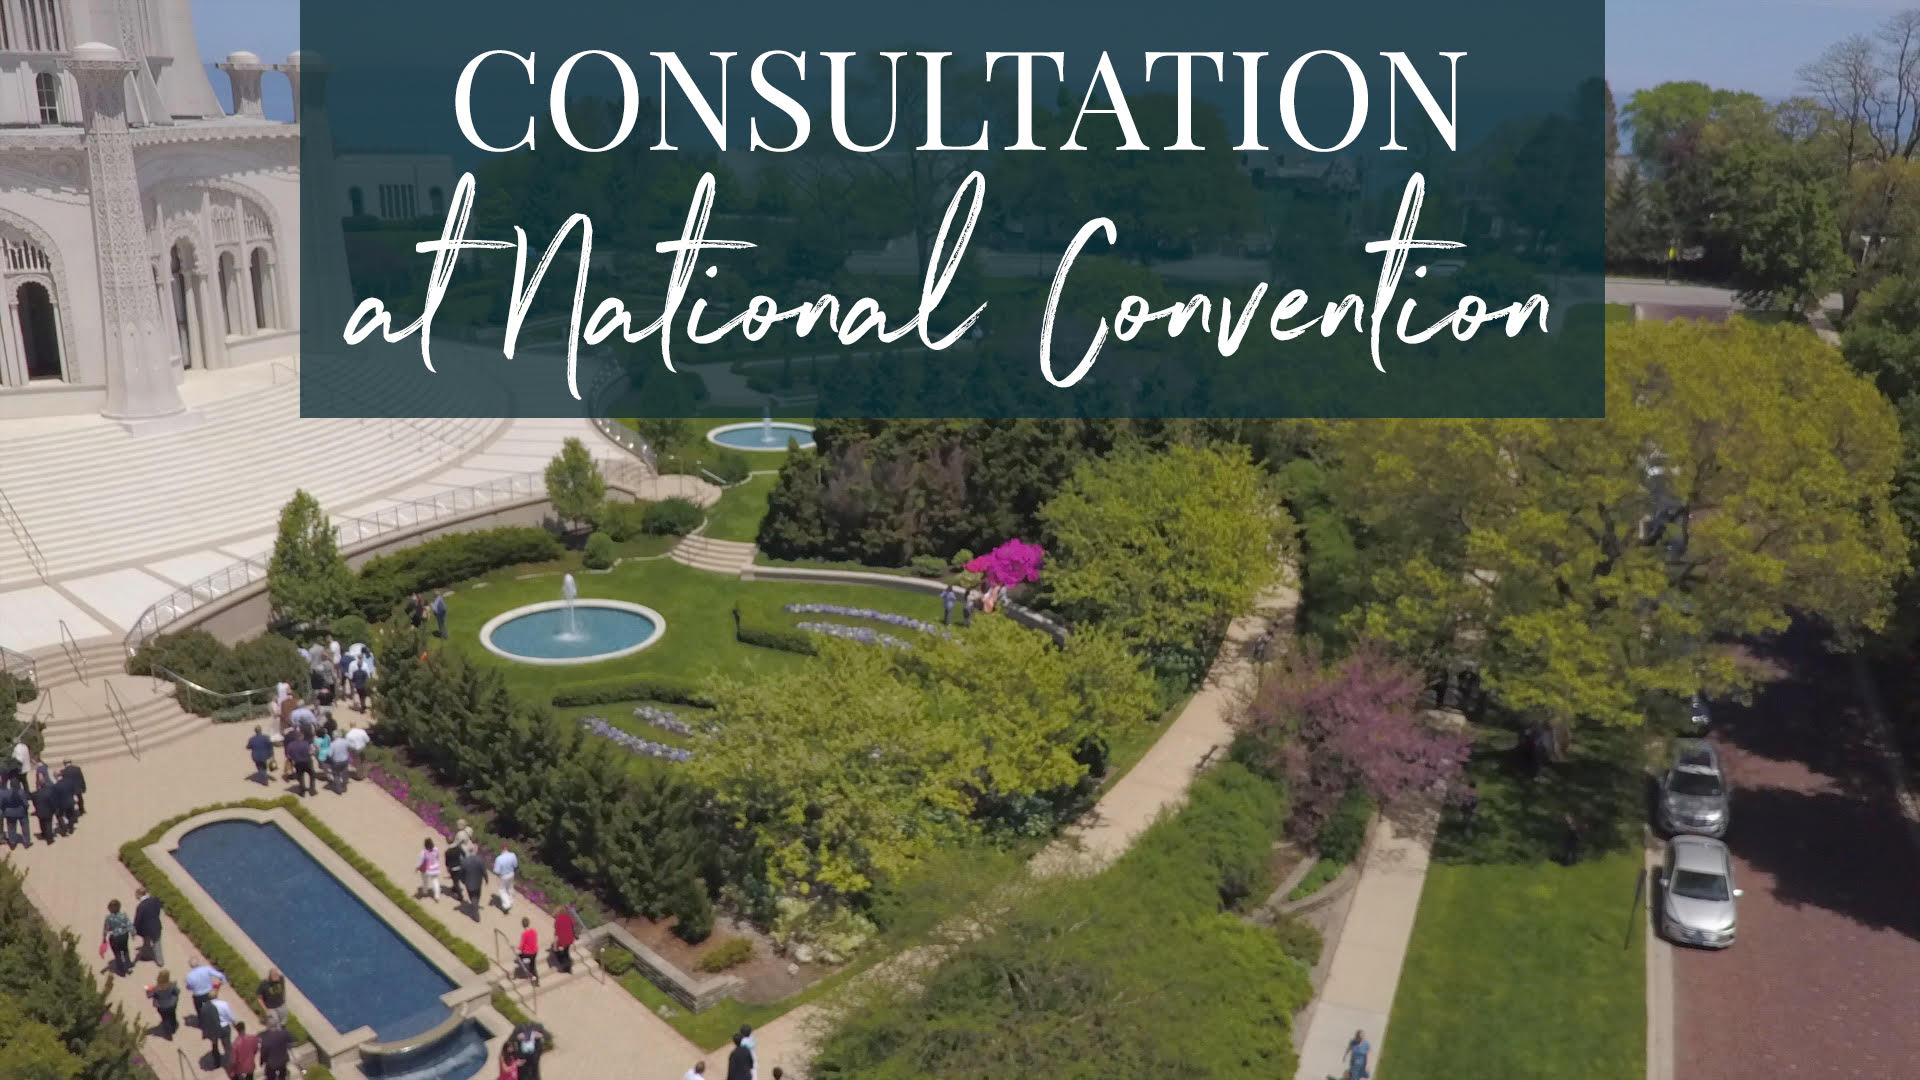 Consultation at Baha’i National Convention